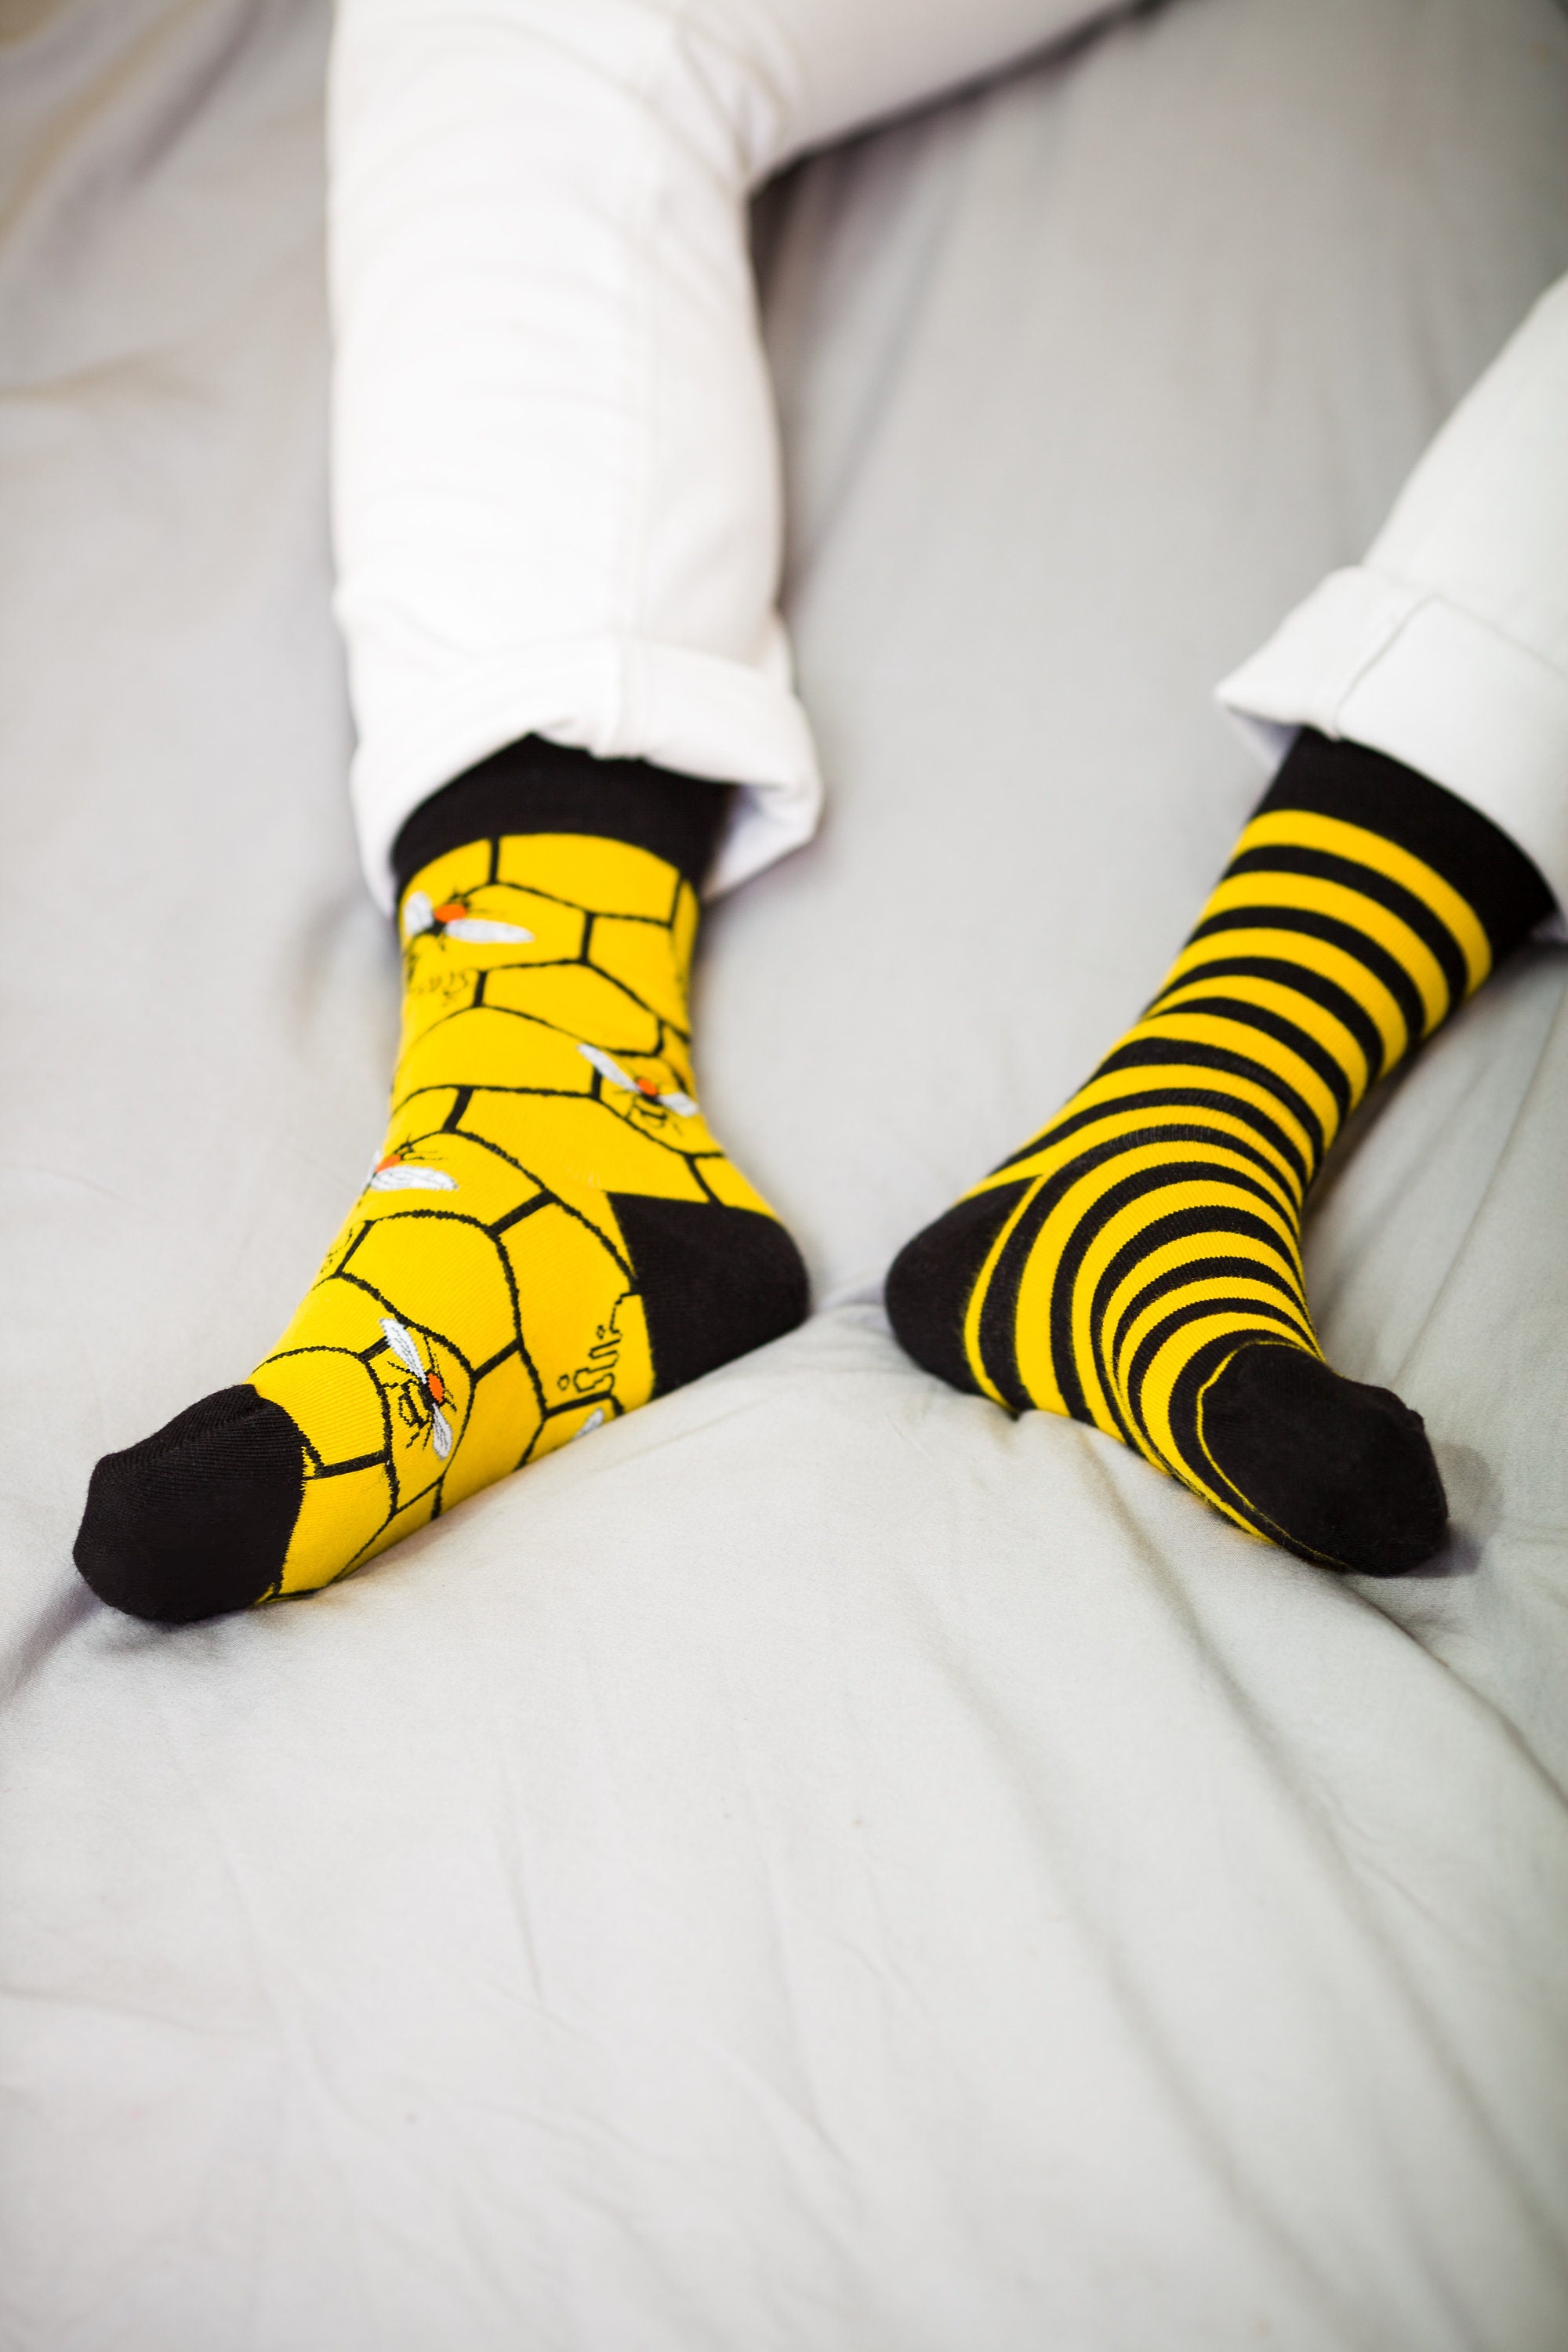 Calcetines de abeja ocupada Calcetines de abejas calcetines geniales calcetines  amarillos negros calcetines locos Calcetines de abejas calcetines de  colores calcetines de colores TODOSOCKS -  México